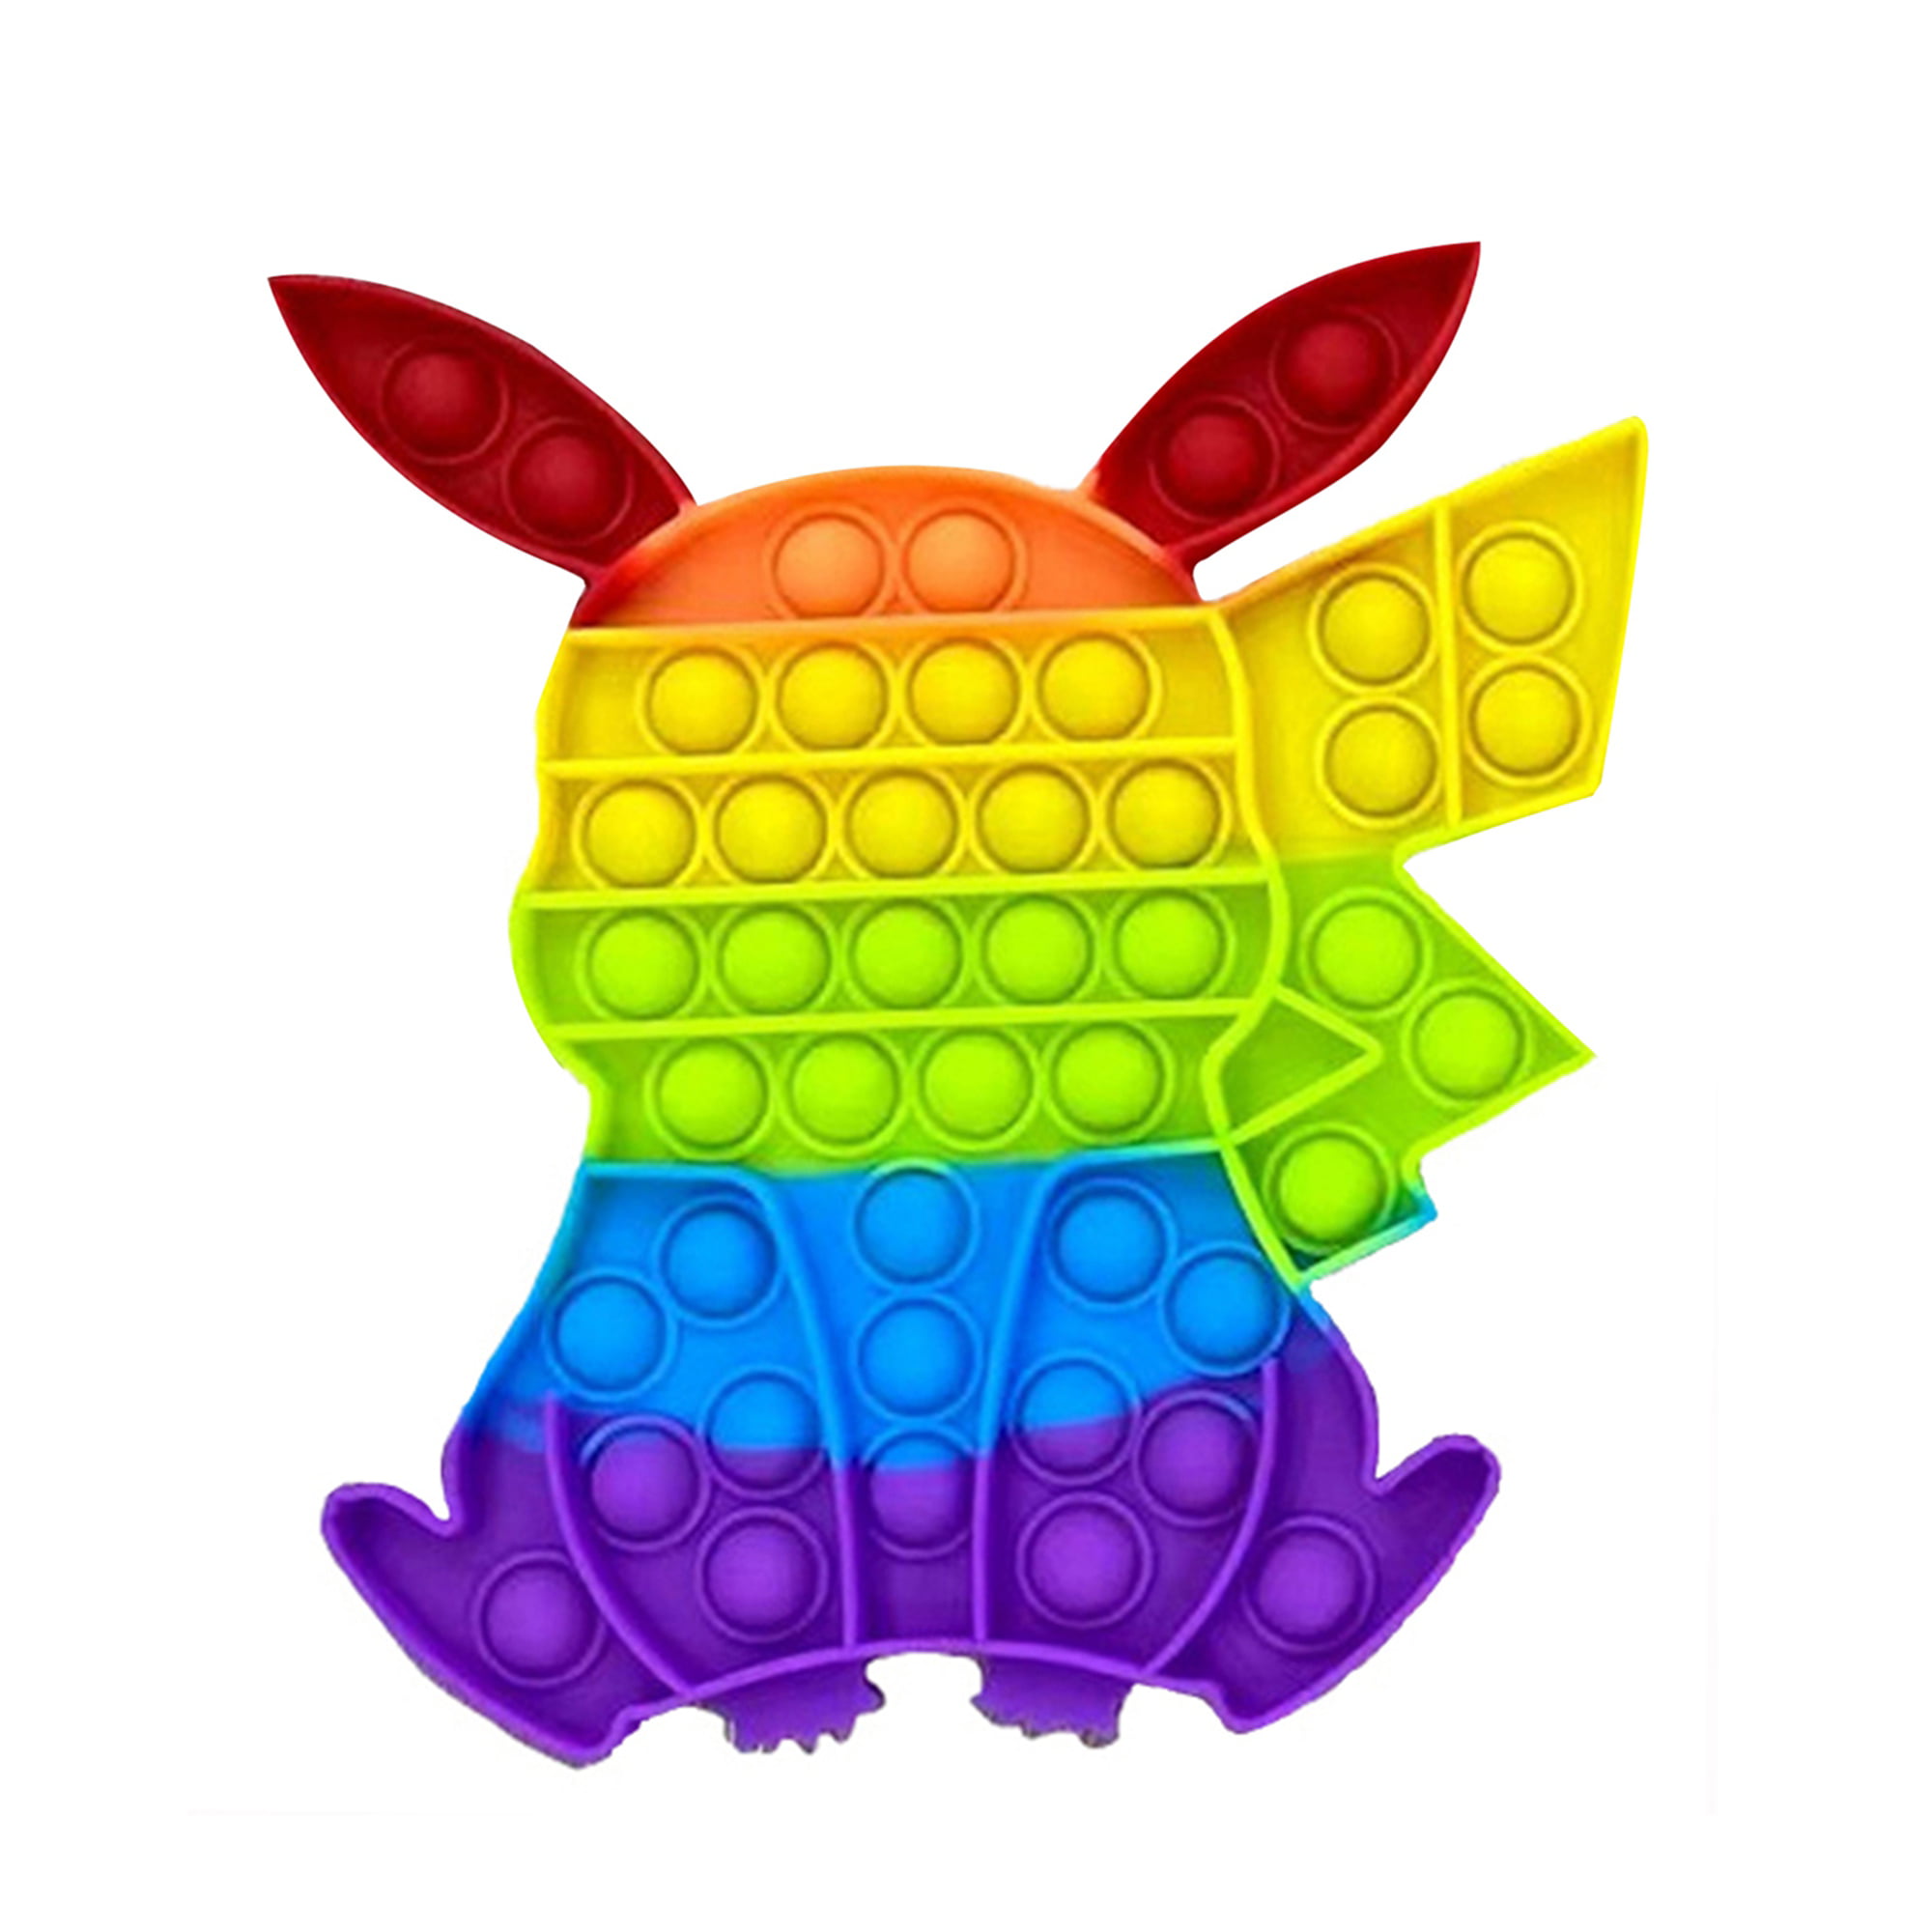 Details about   Colorful Dino Push Pop Sensory Fidget Toy Stress Relief 